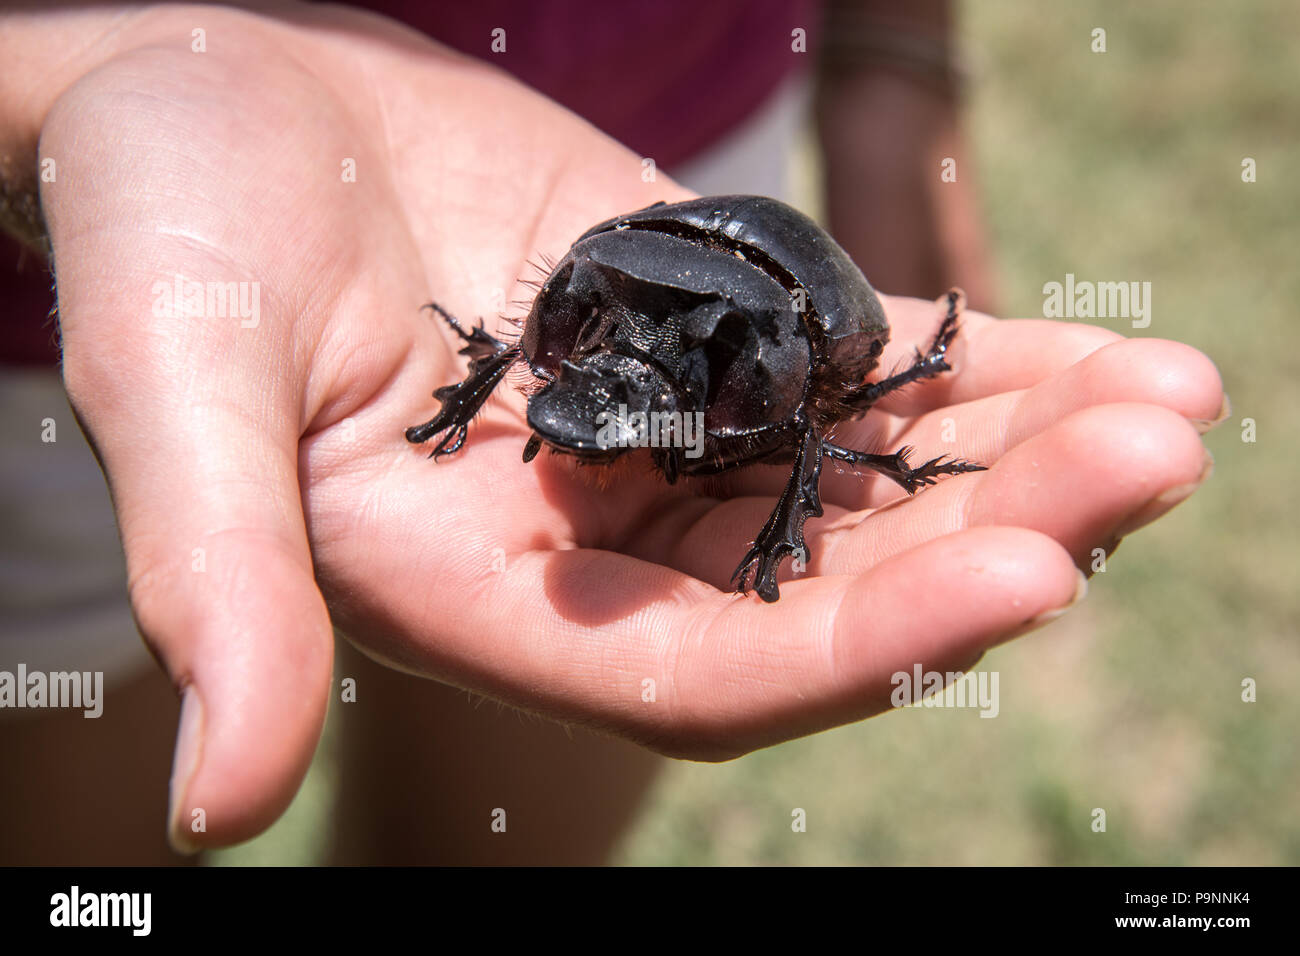 Un dung beetle si siede nel palmo di una mano. Hwange, Zimbabwe Foto Stock